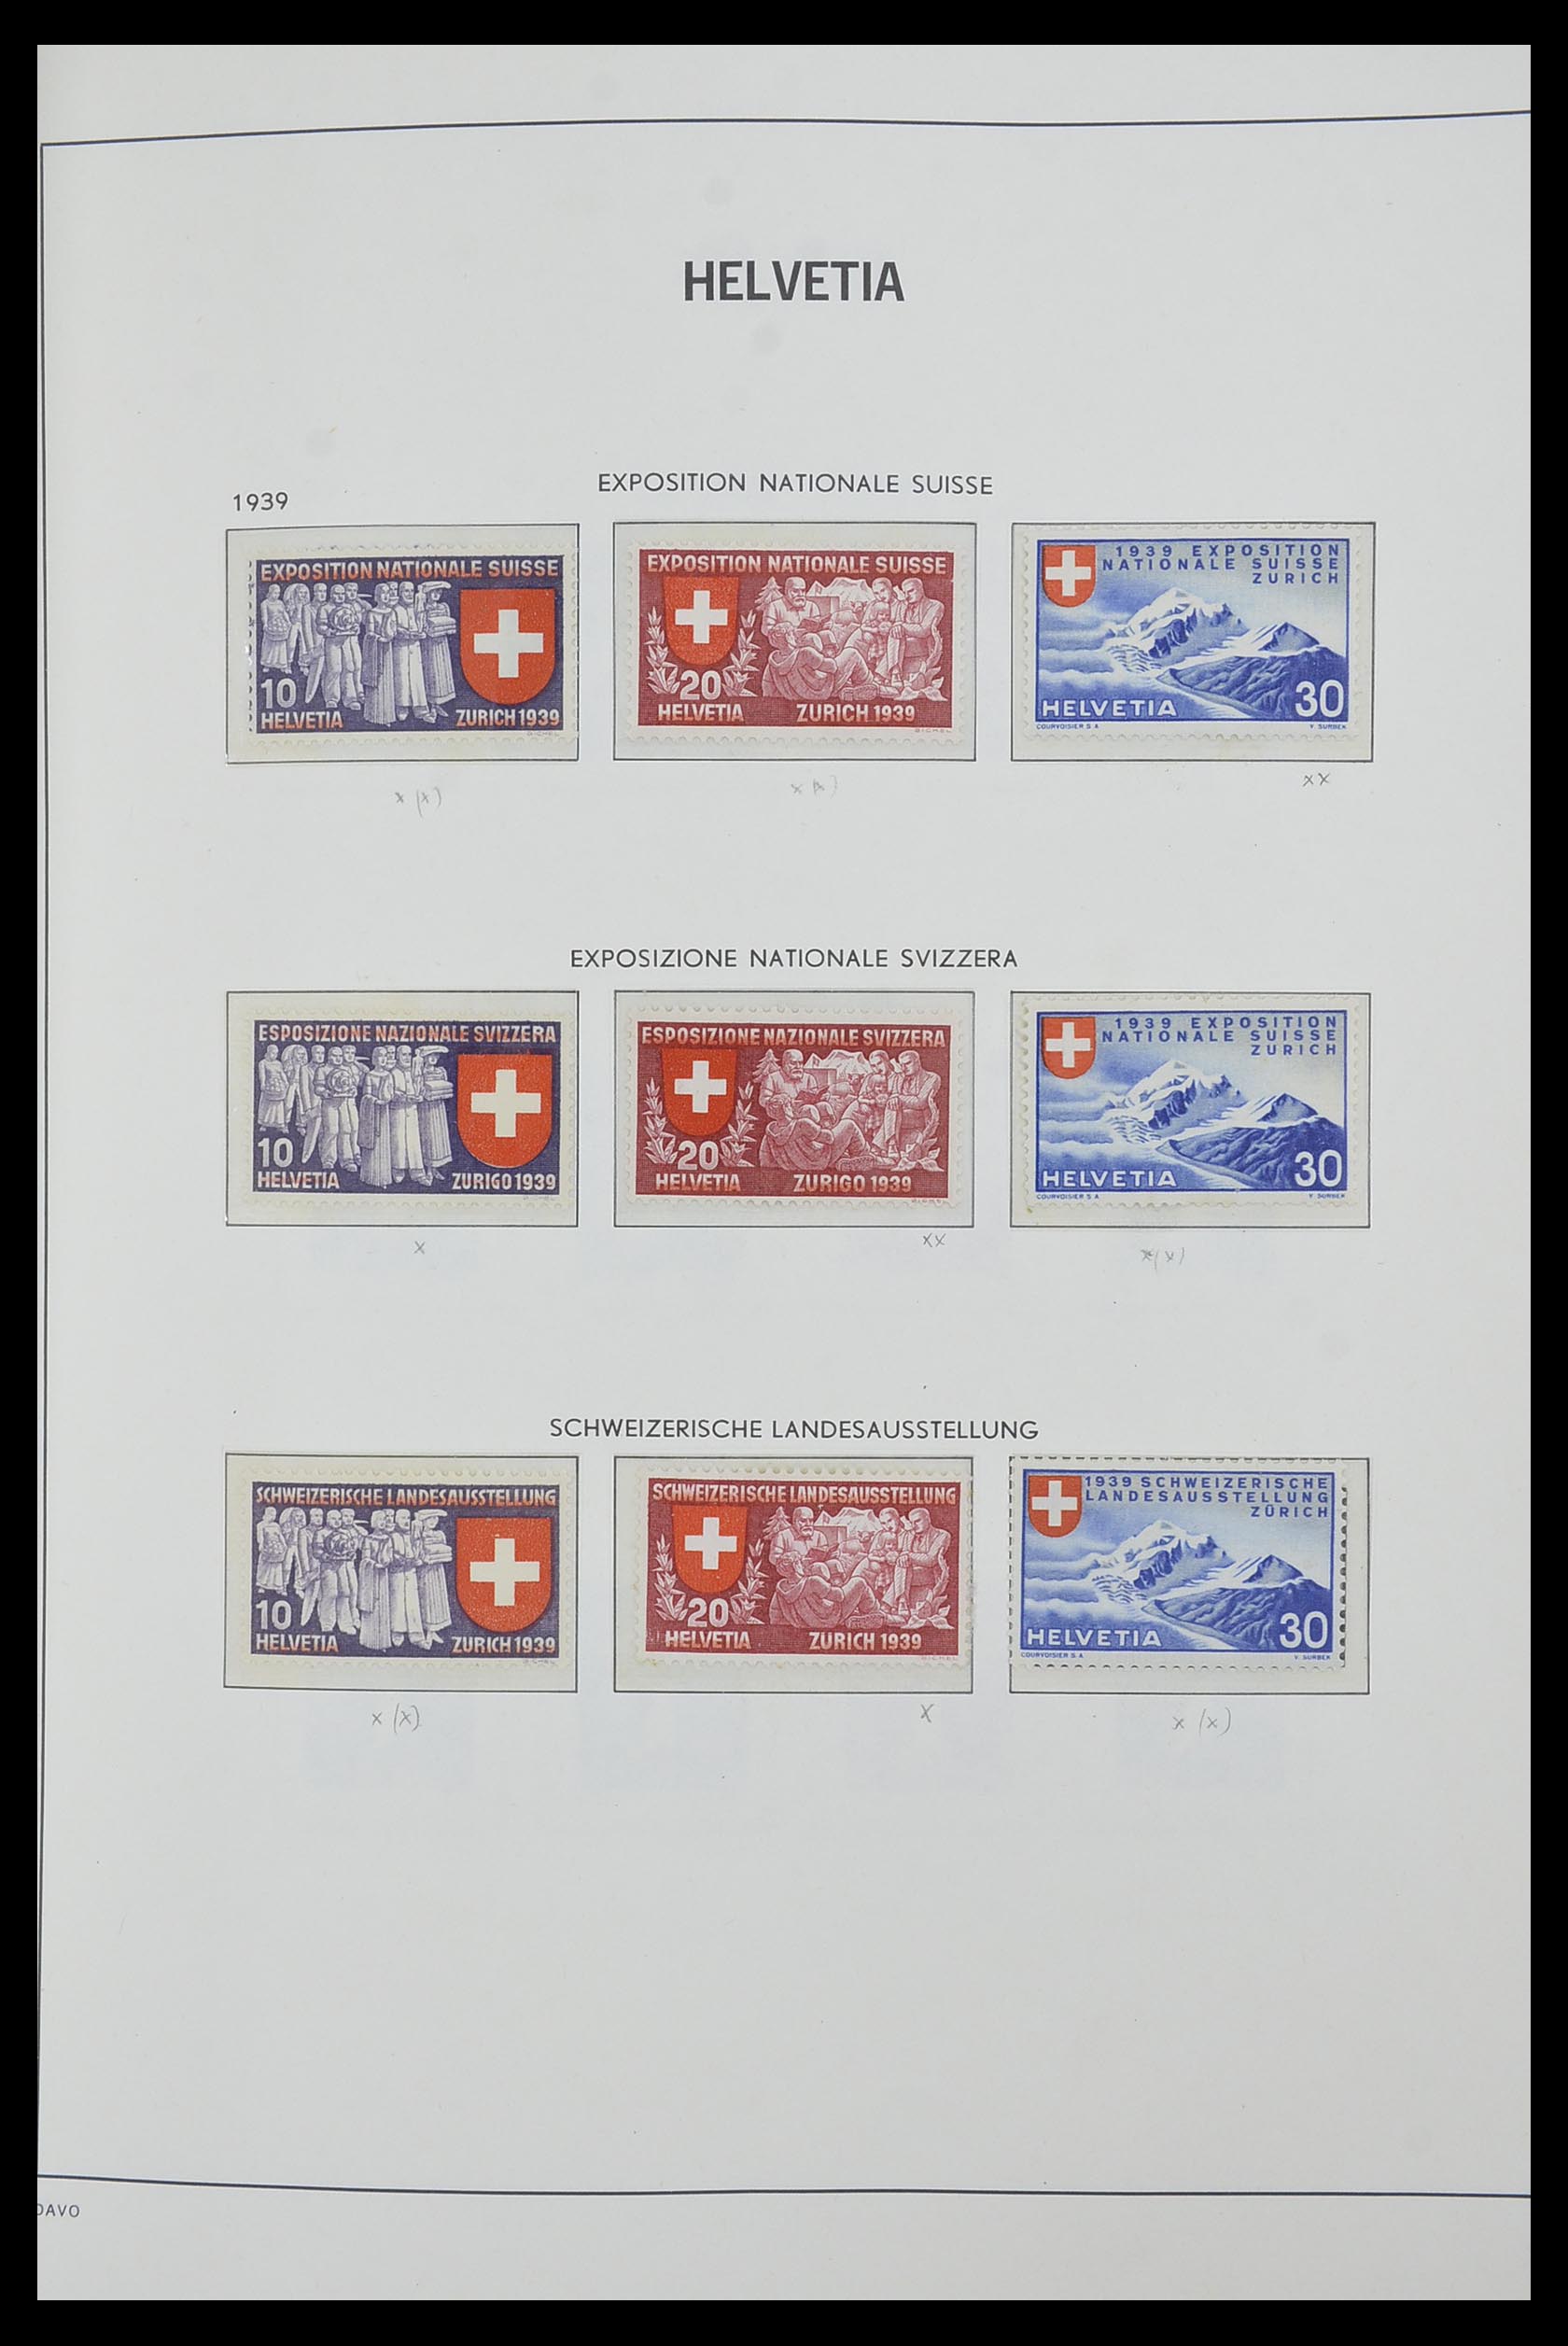 33556 021 - Stamp collection 33556 Switzerland 1862-2000.